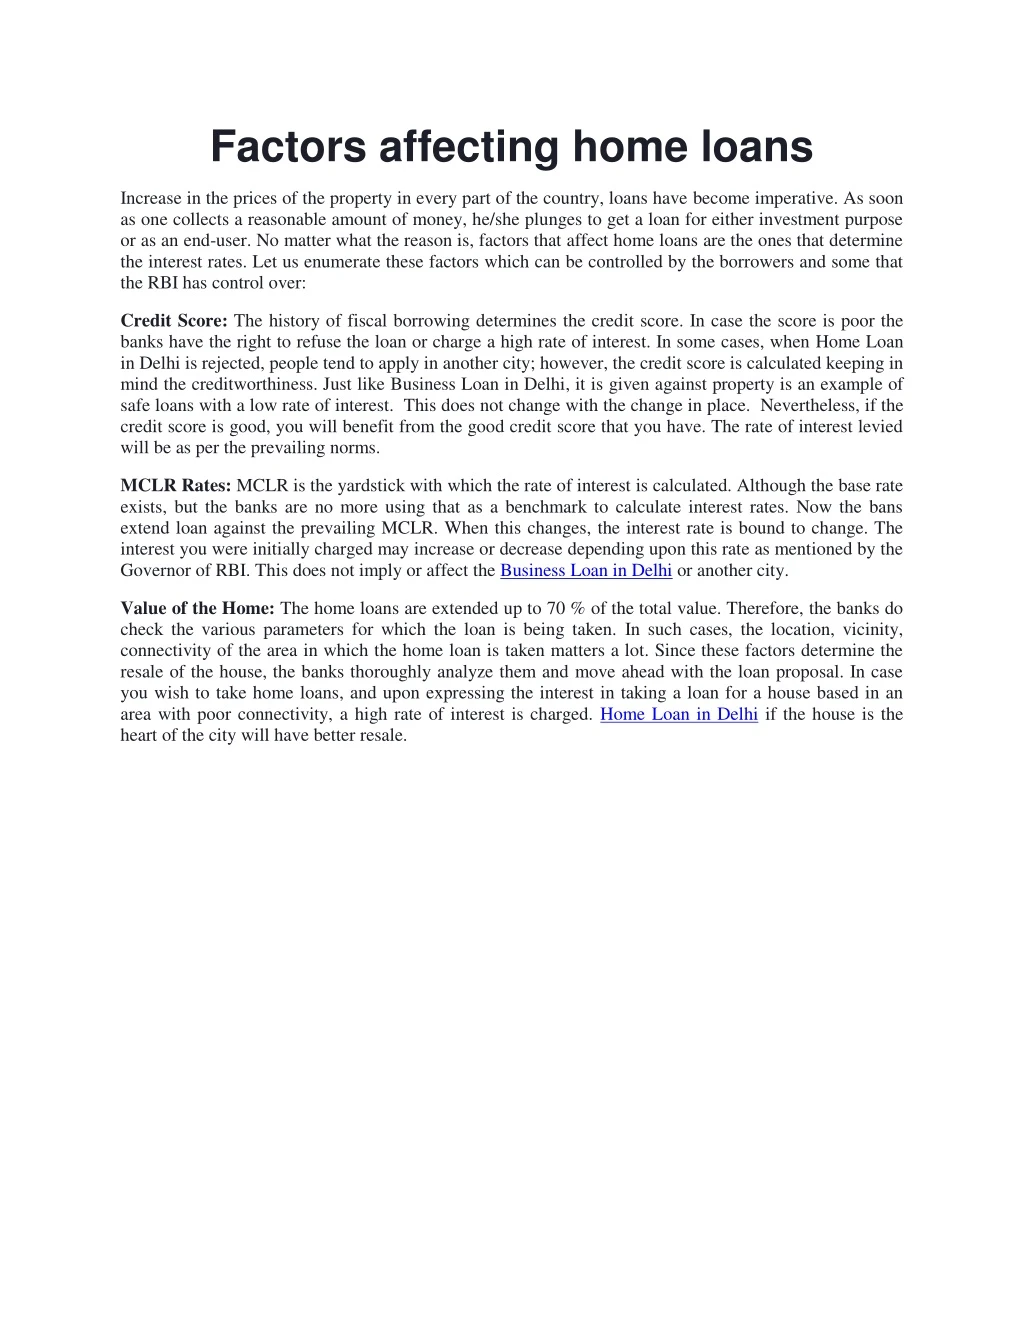 factors affecting home loans